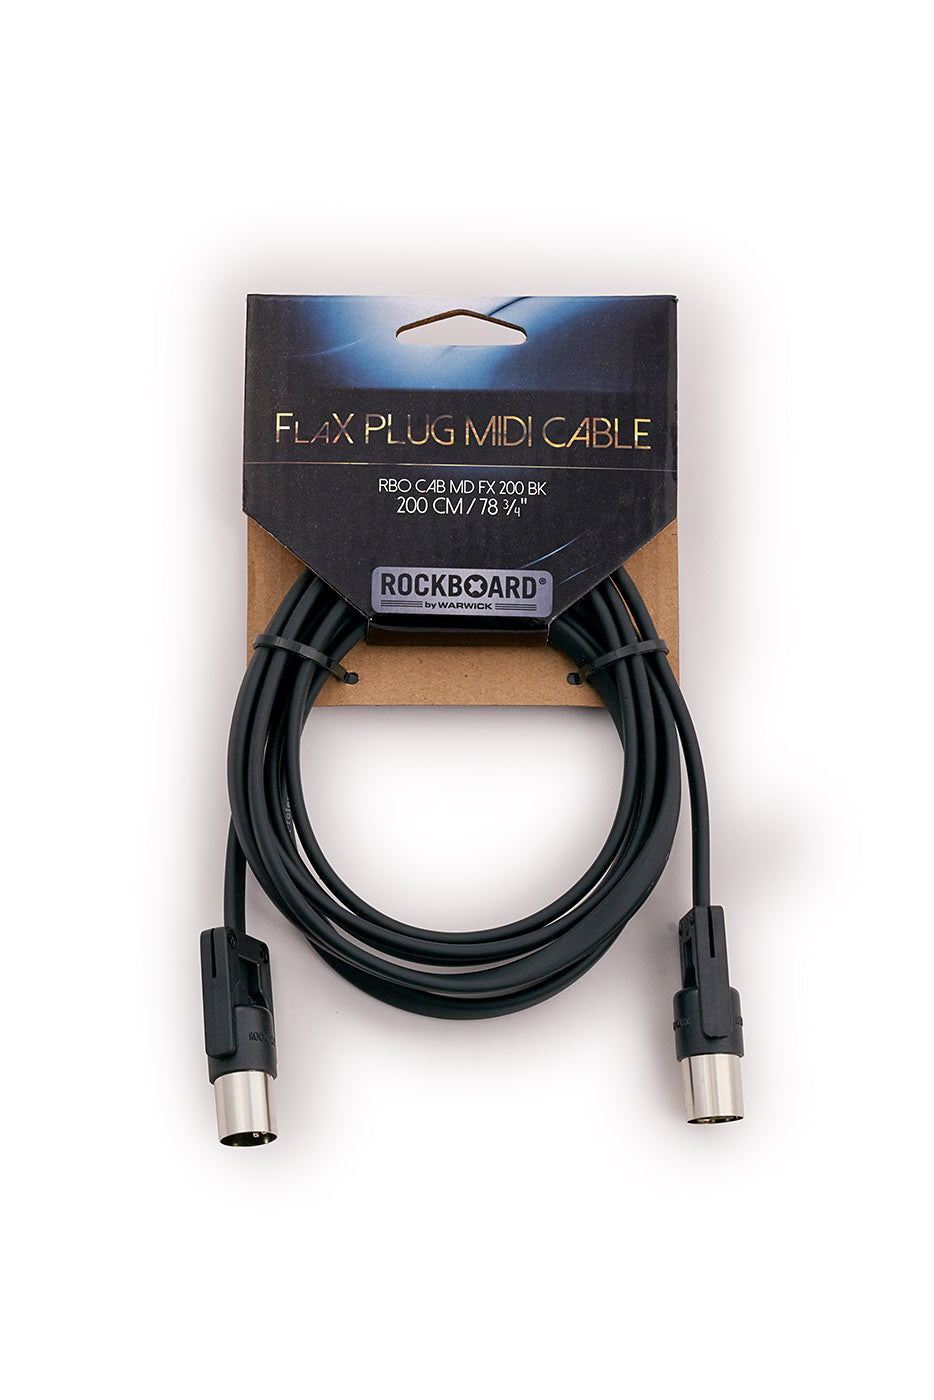 Câble MIDI RockBoard FlaX Plug, 200 cm / 78 3/4